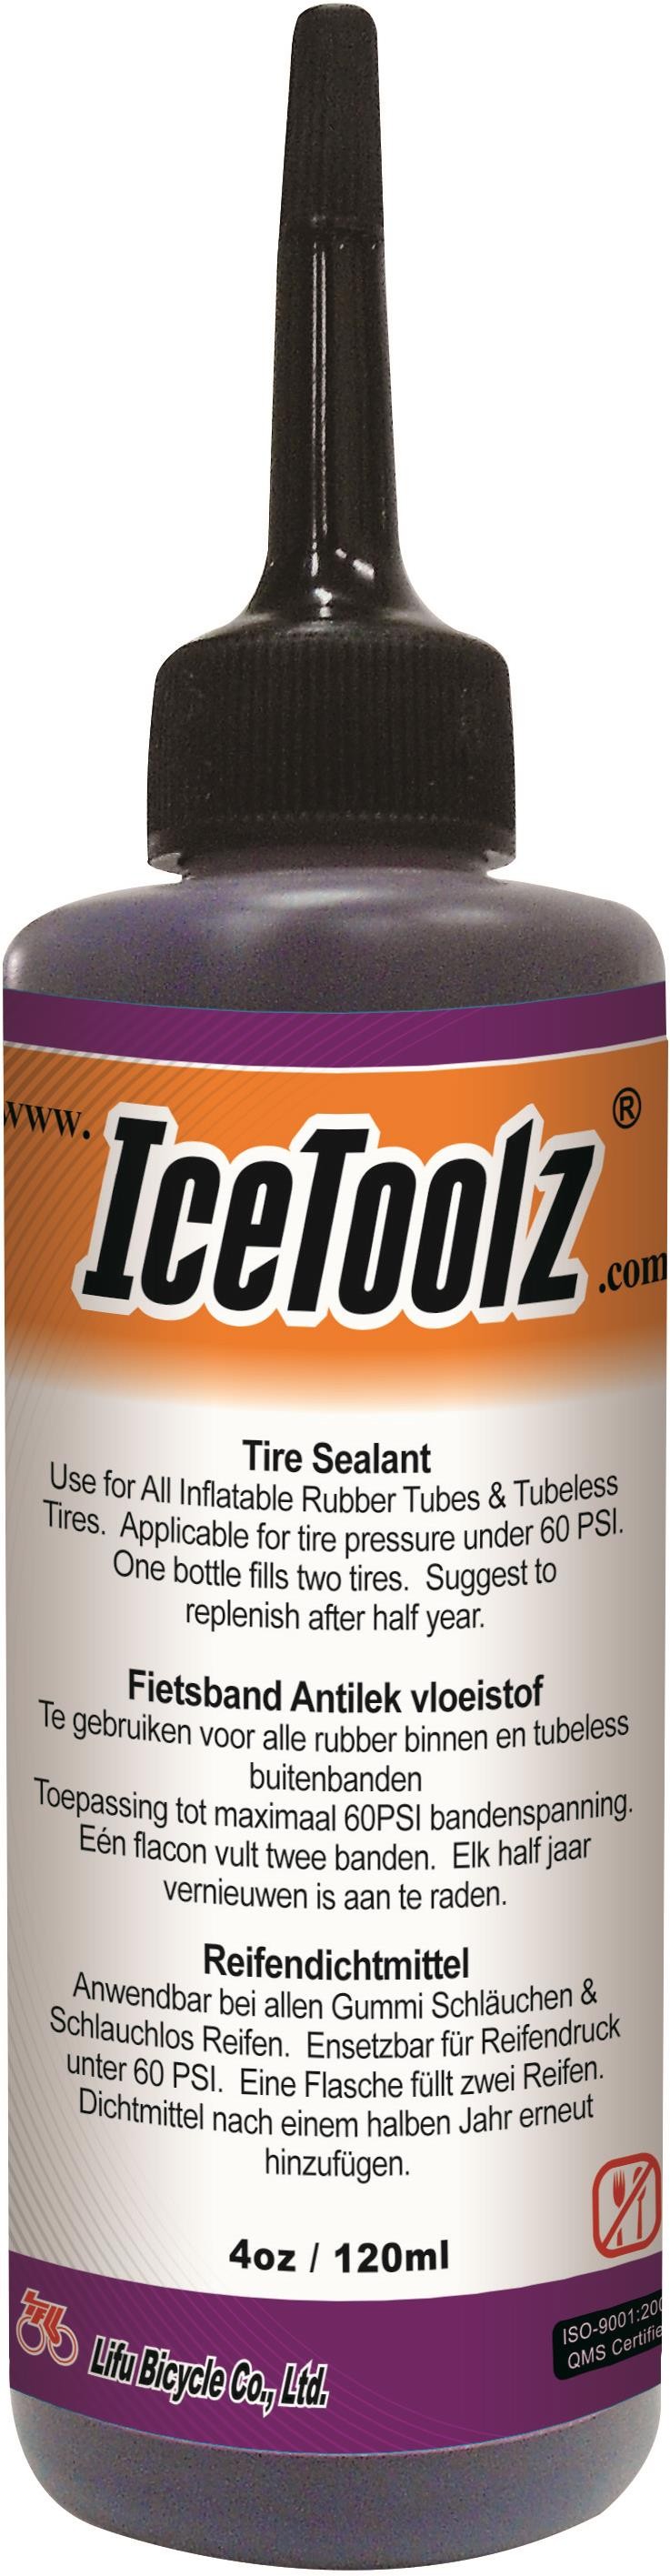 Tyre Sealant image 0